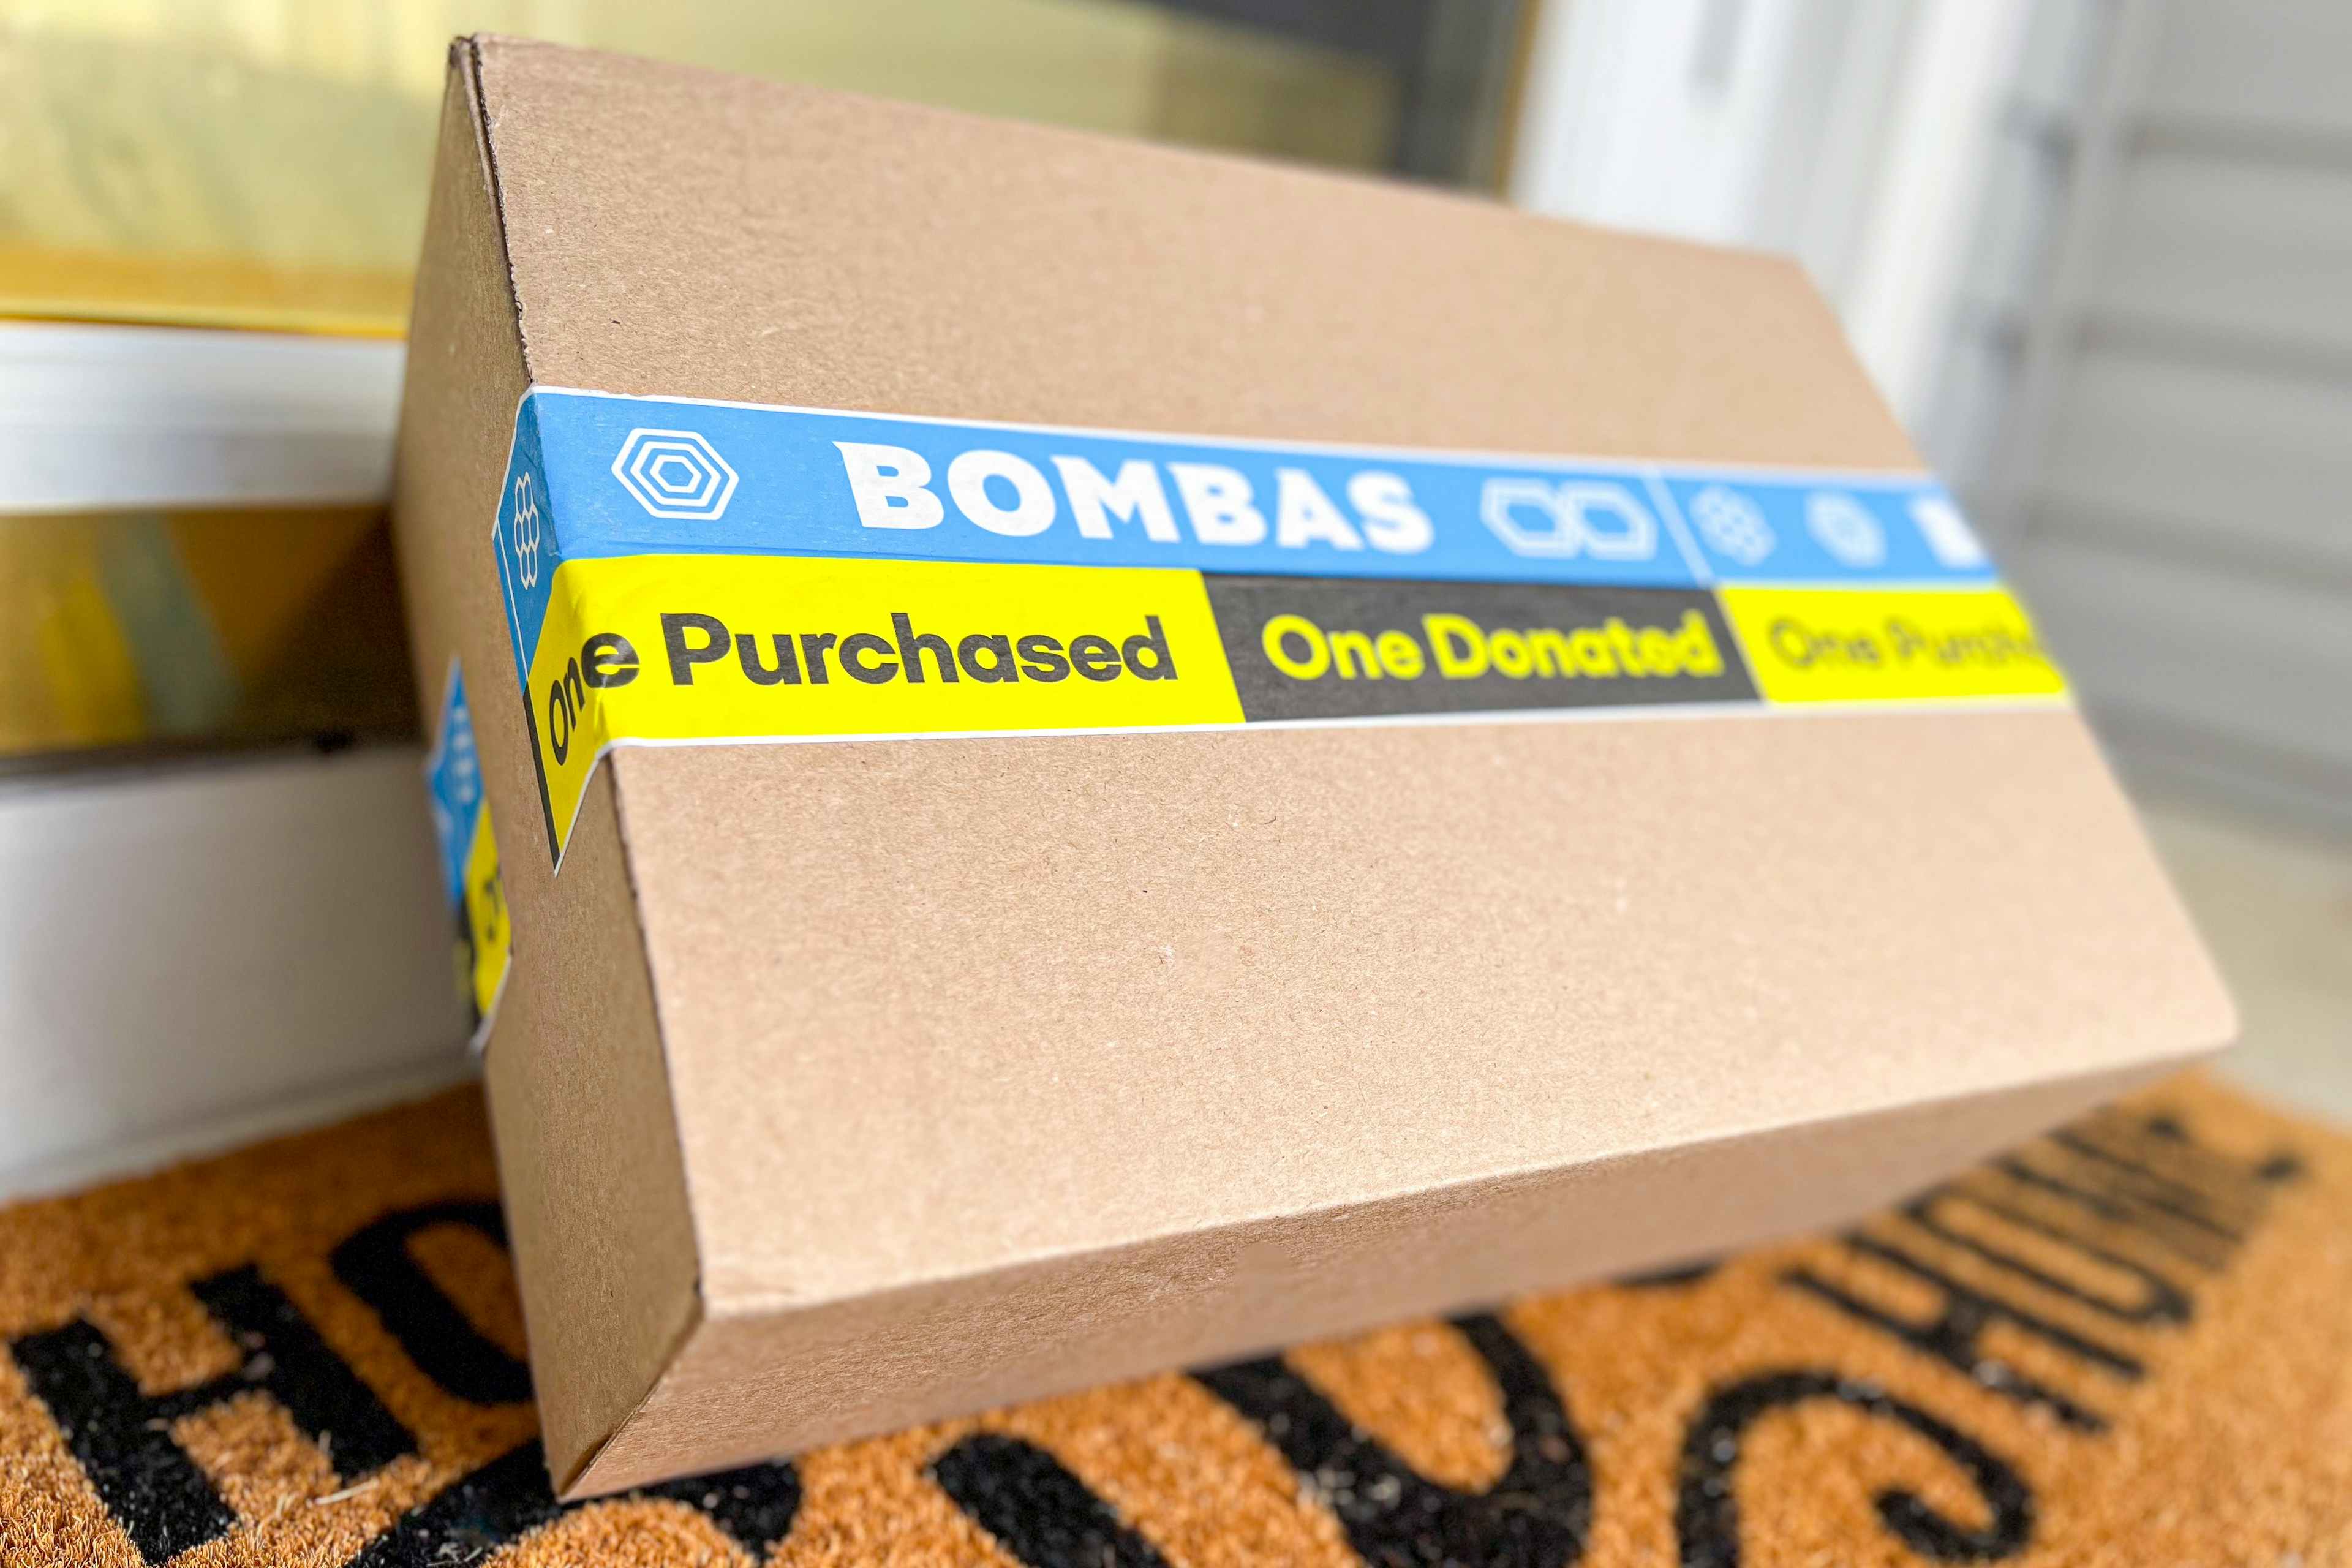 BOMBAS-box-front-porch-kcl-3